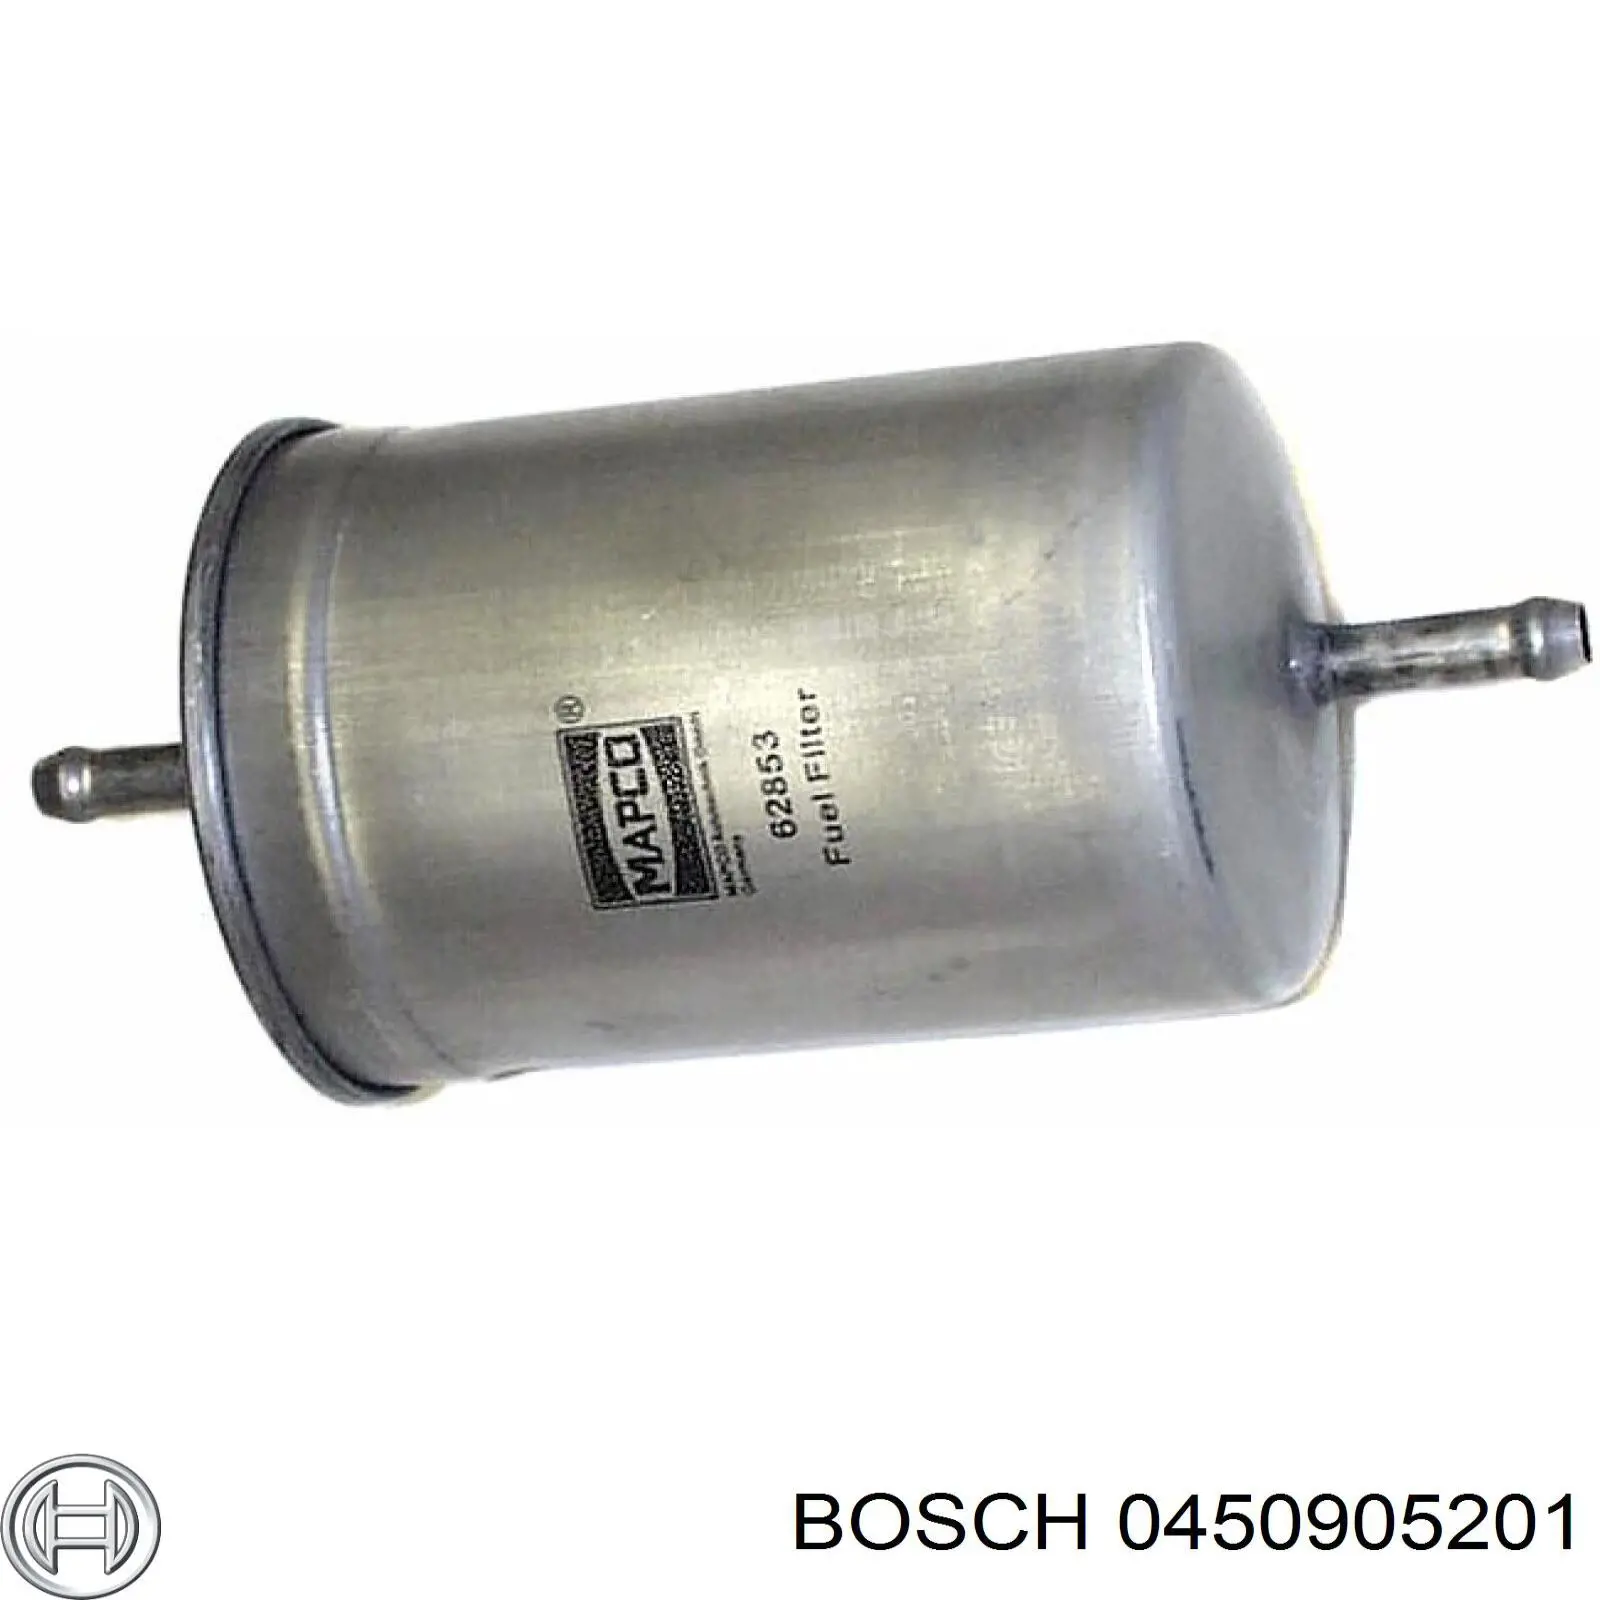 0450905201 Bosch filtro combustible